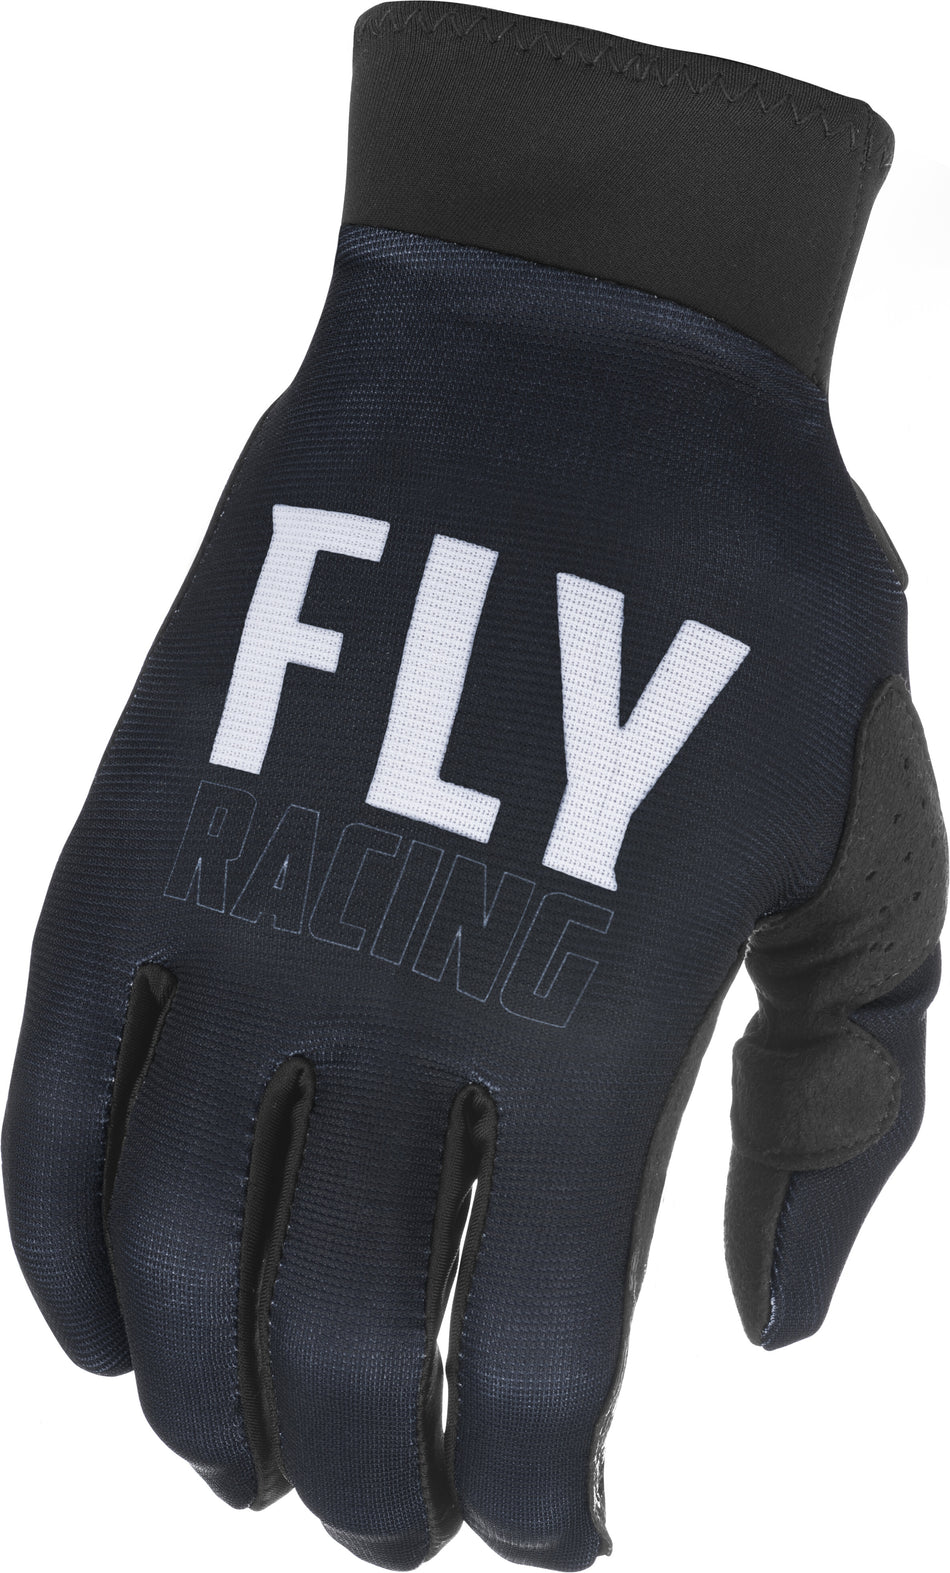 FLY RACING Pro Lite Gloves Black/White Sz 08 374-85008